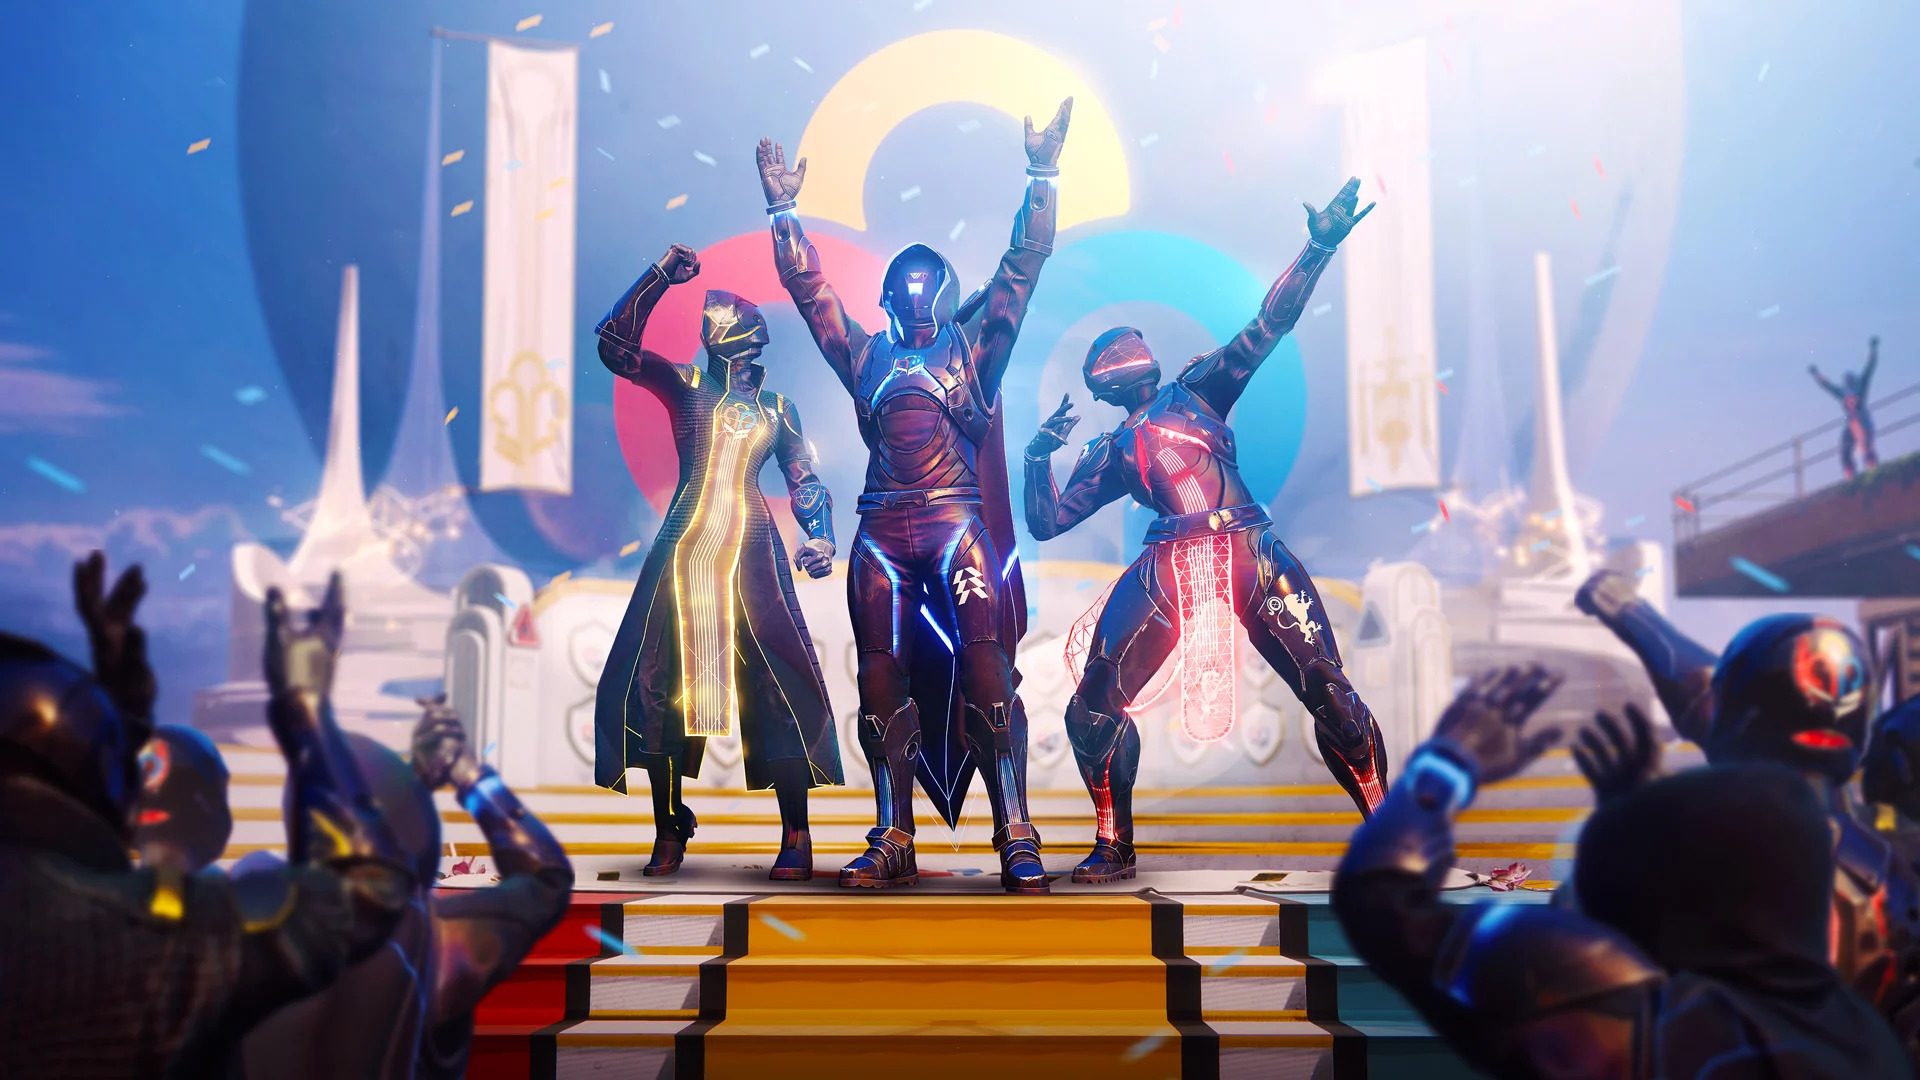 Destiny 2 Guardian classes standing on a podium celebrating